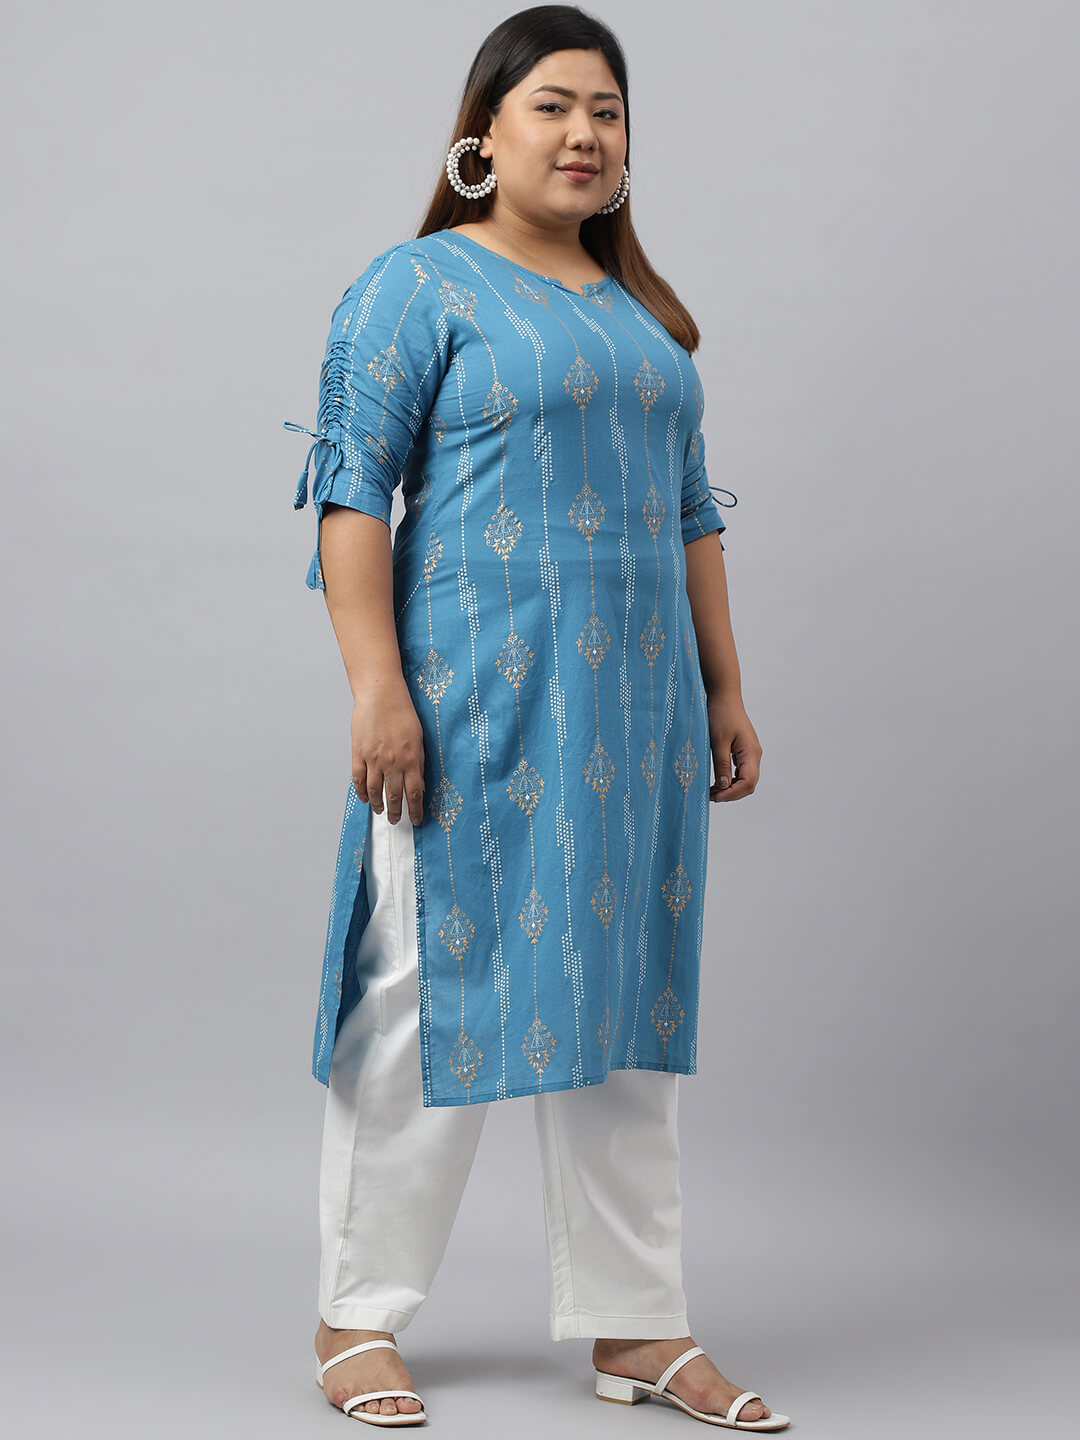 XL LOVE by Janasya Women's Plus Size Blue Cotton Ethnic Motifs Straight kurta